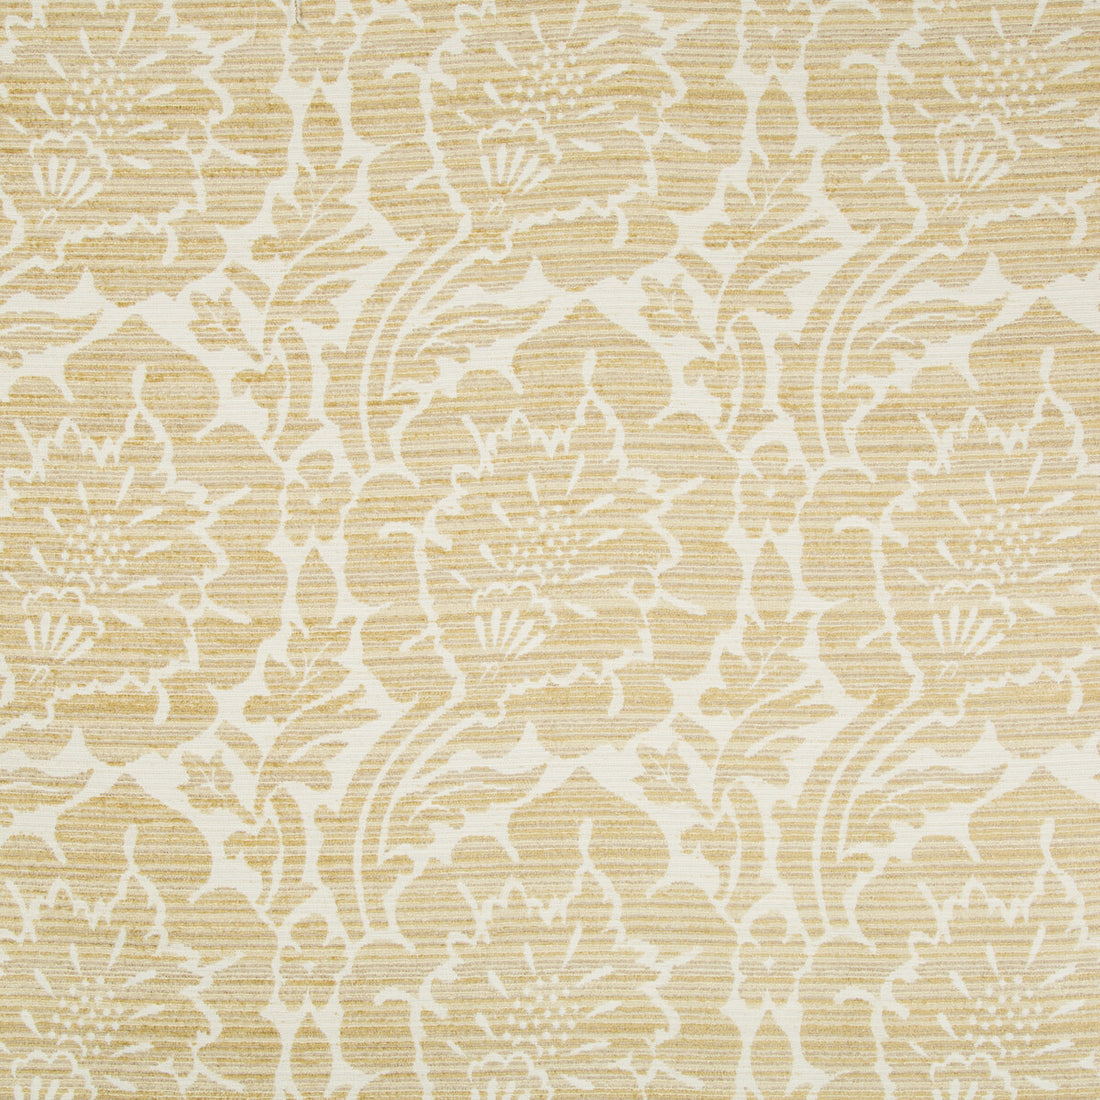 Kravet Design fabric in 34712-16 color - pattern 34712.16.0 - by Kravet Design in the Gis collection